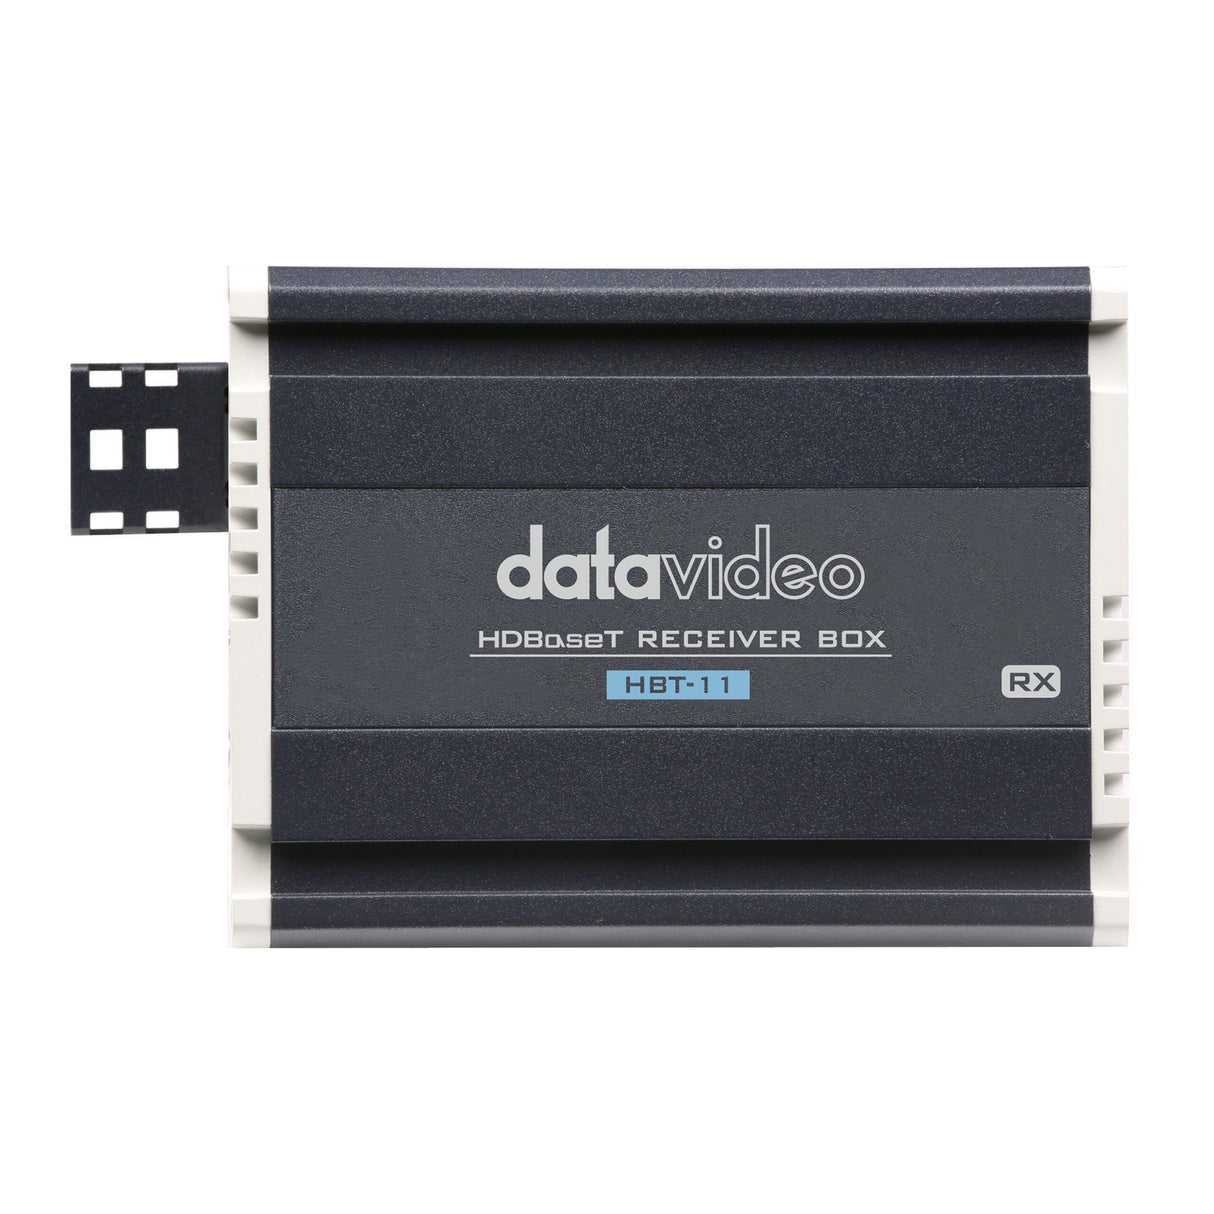 Datavideo PTC-150TL-11 HD/SD PTZ Video Camera with HDBaseT Technology